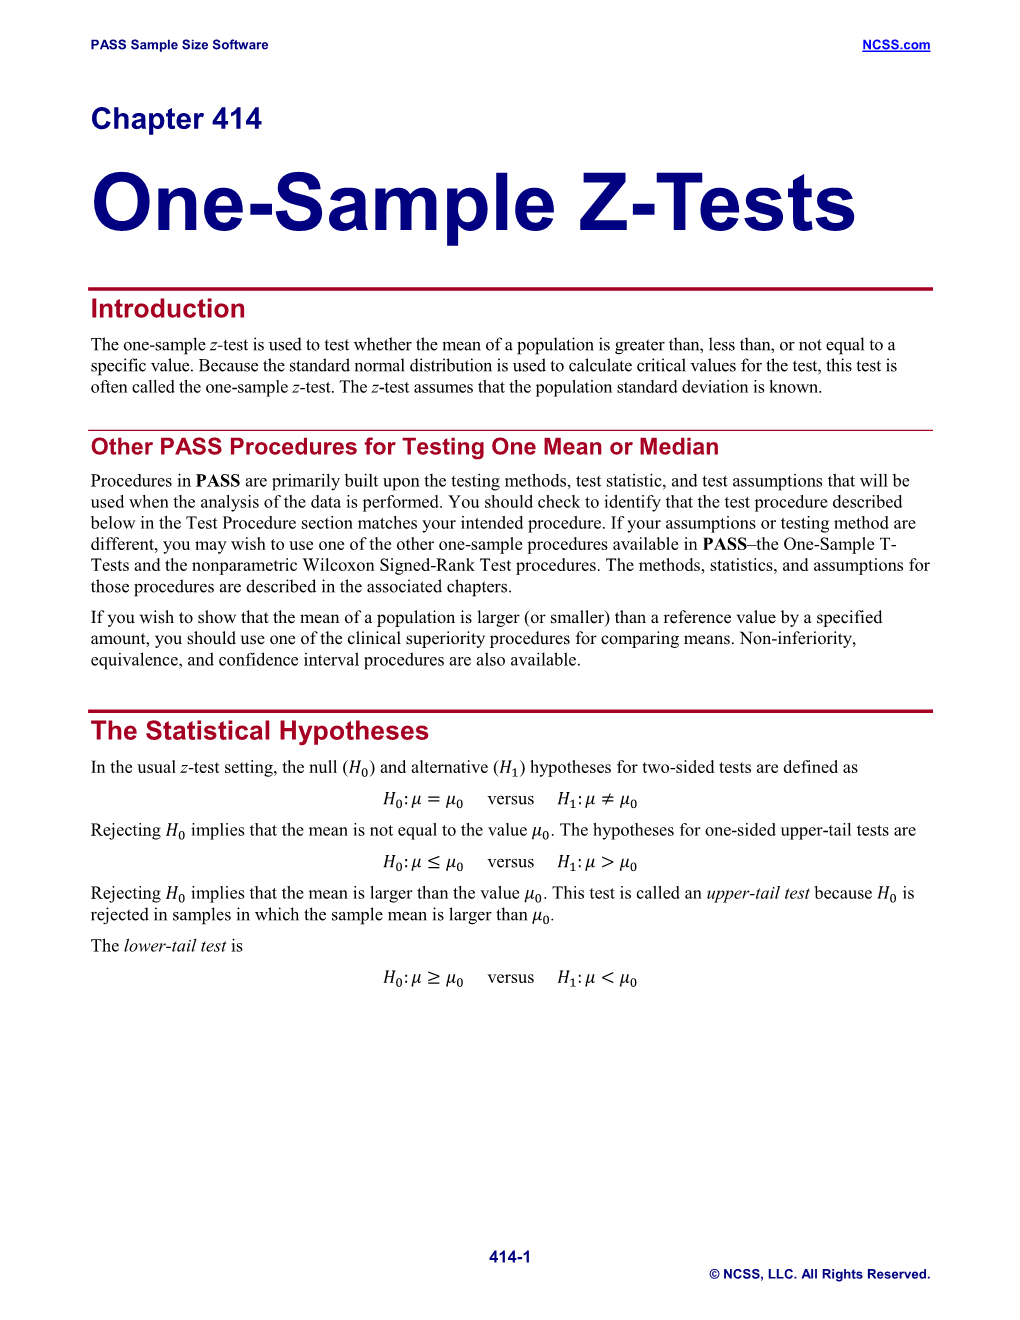 One-Sample Z-Tests